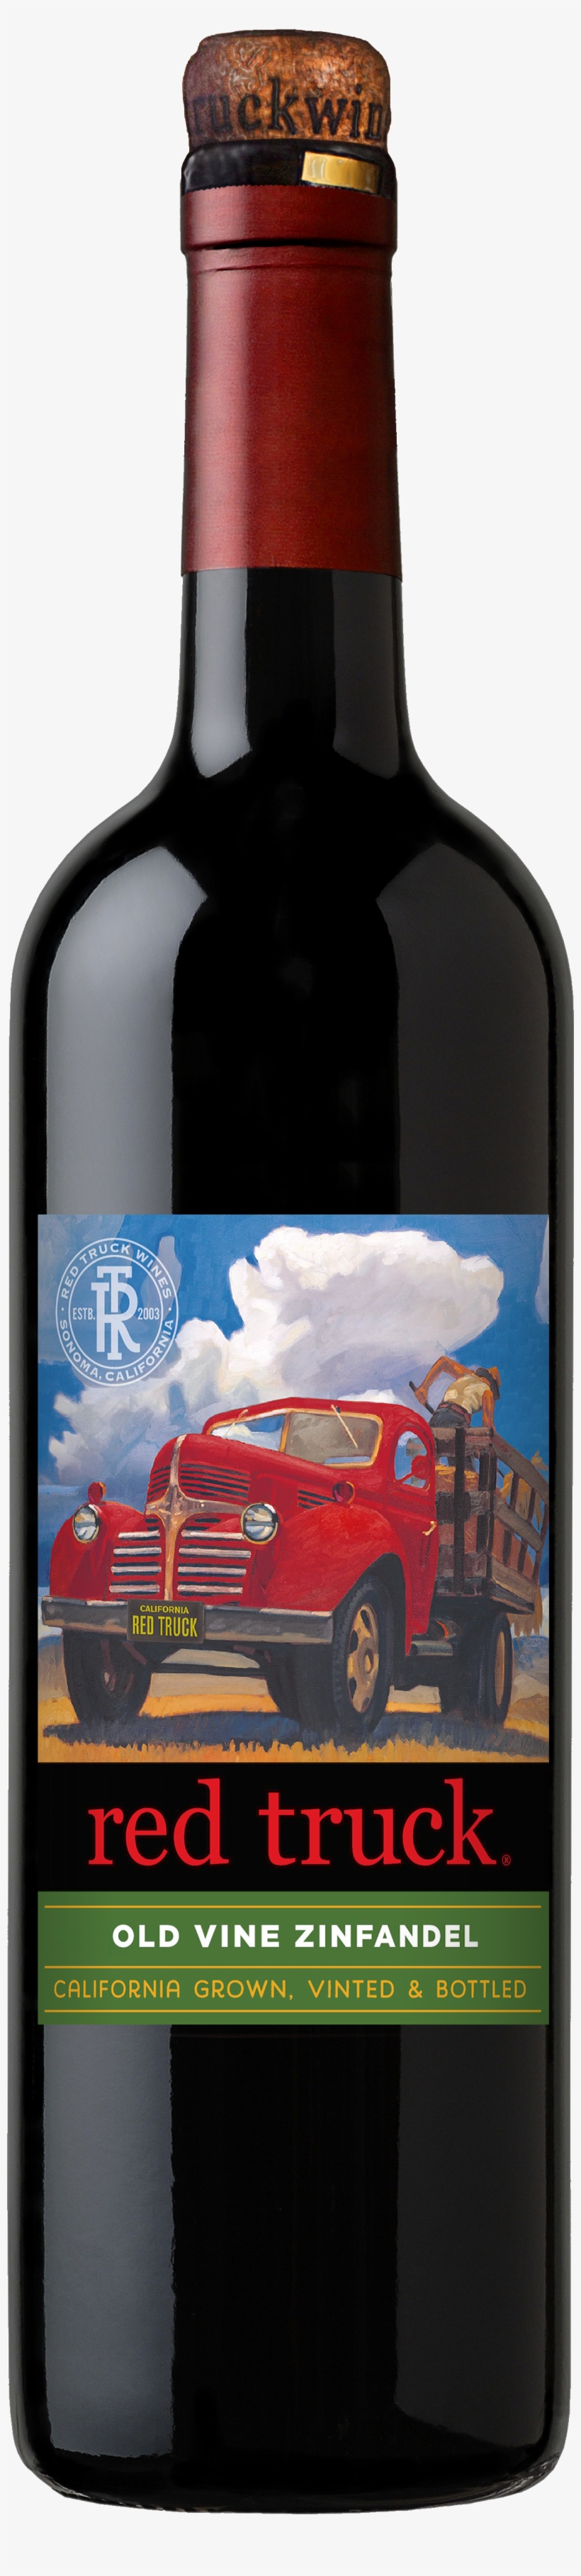 Old Vine Zinfandel Helix Cork - Red Truck Pinot Grigio, transparent png #2747269